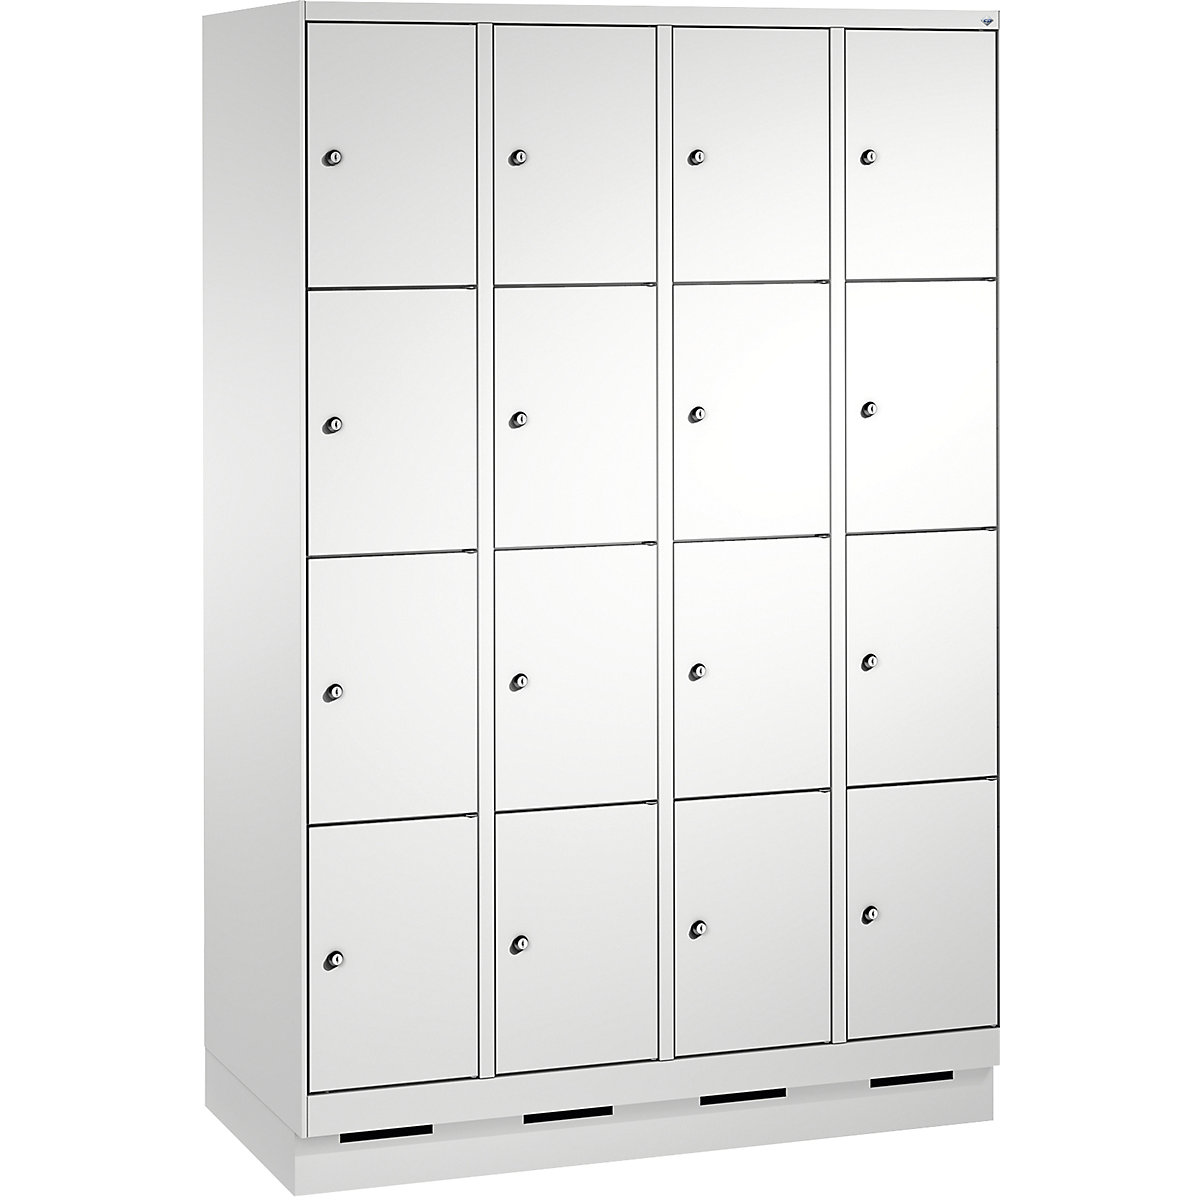 EVOLO locker unit, with plinth – C+P, 4 compartments, 4 shelf compartments each, compartment width 300 mm, light grey / light grey